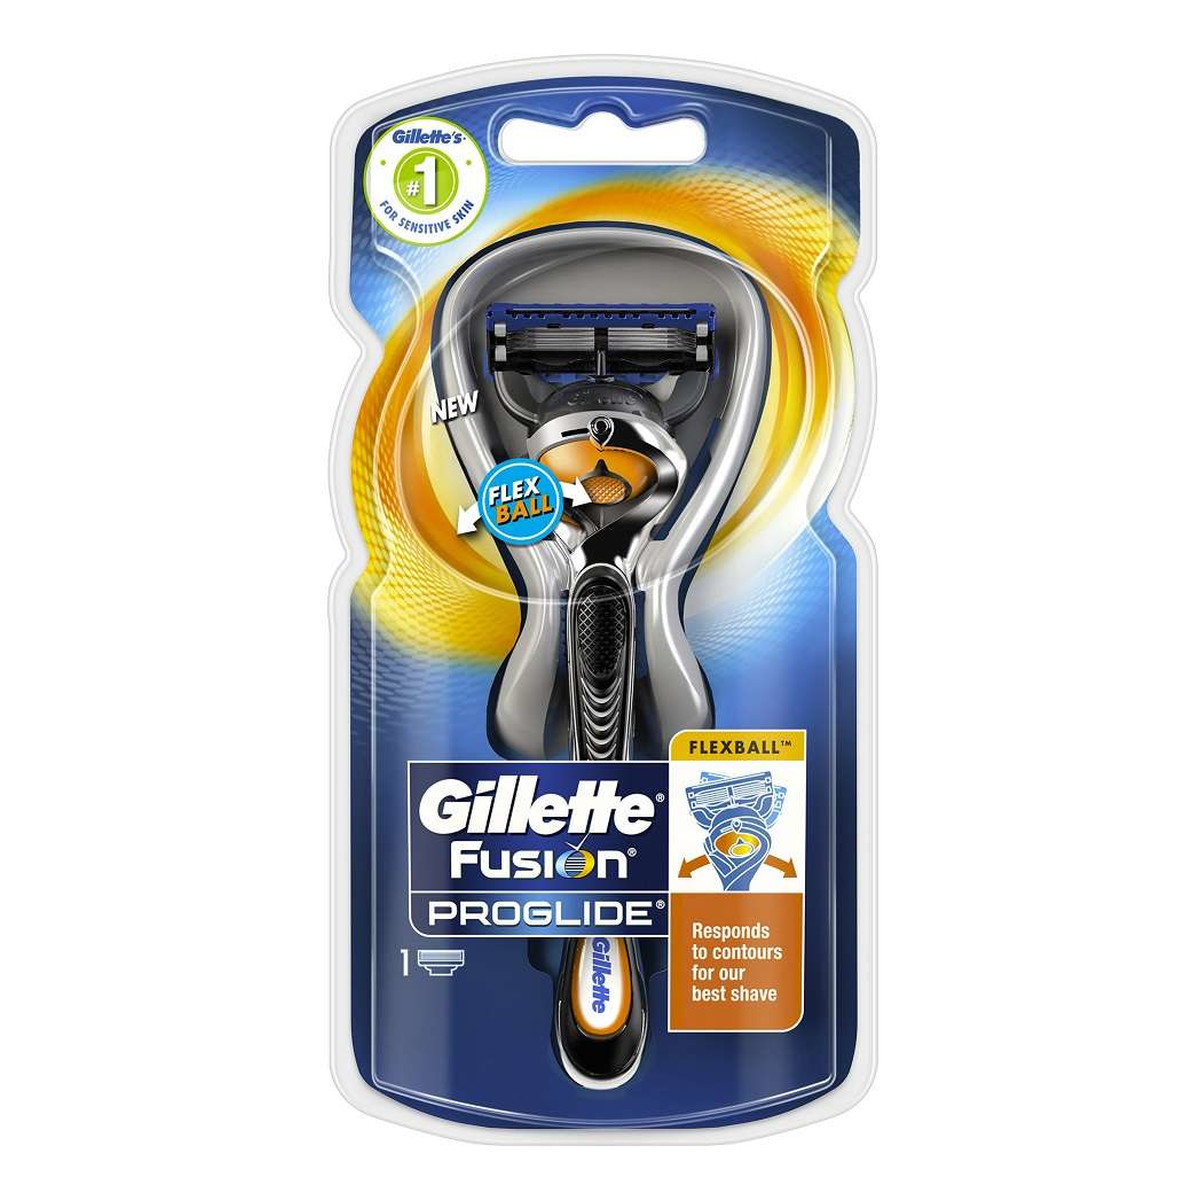 Gillette Fusion Proglide maszynka do golenia